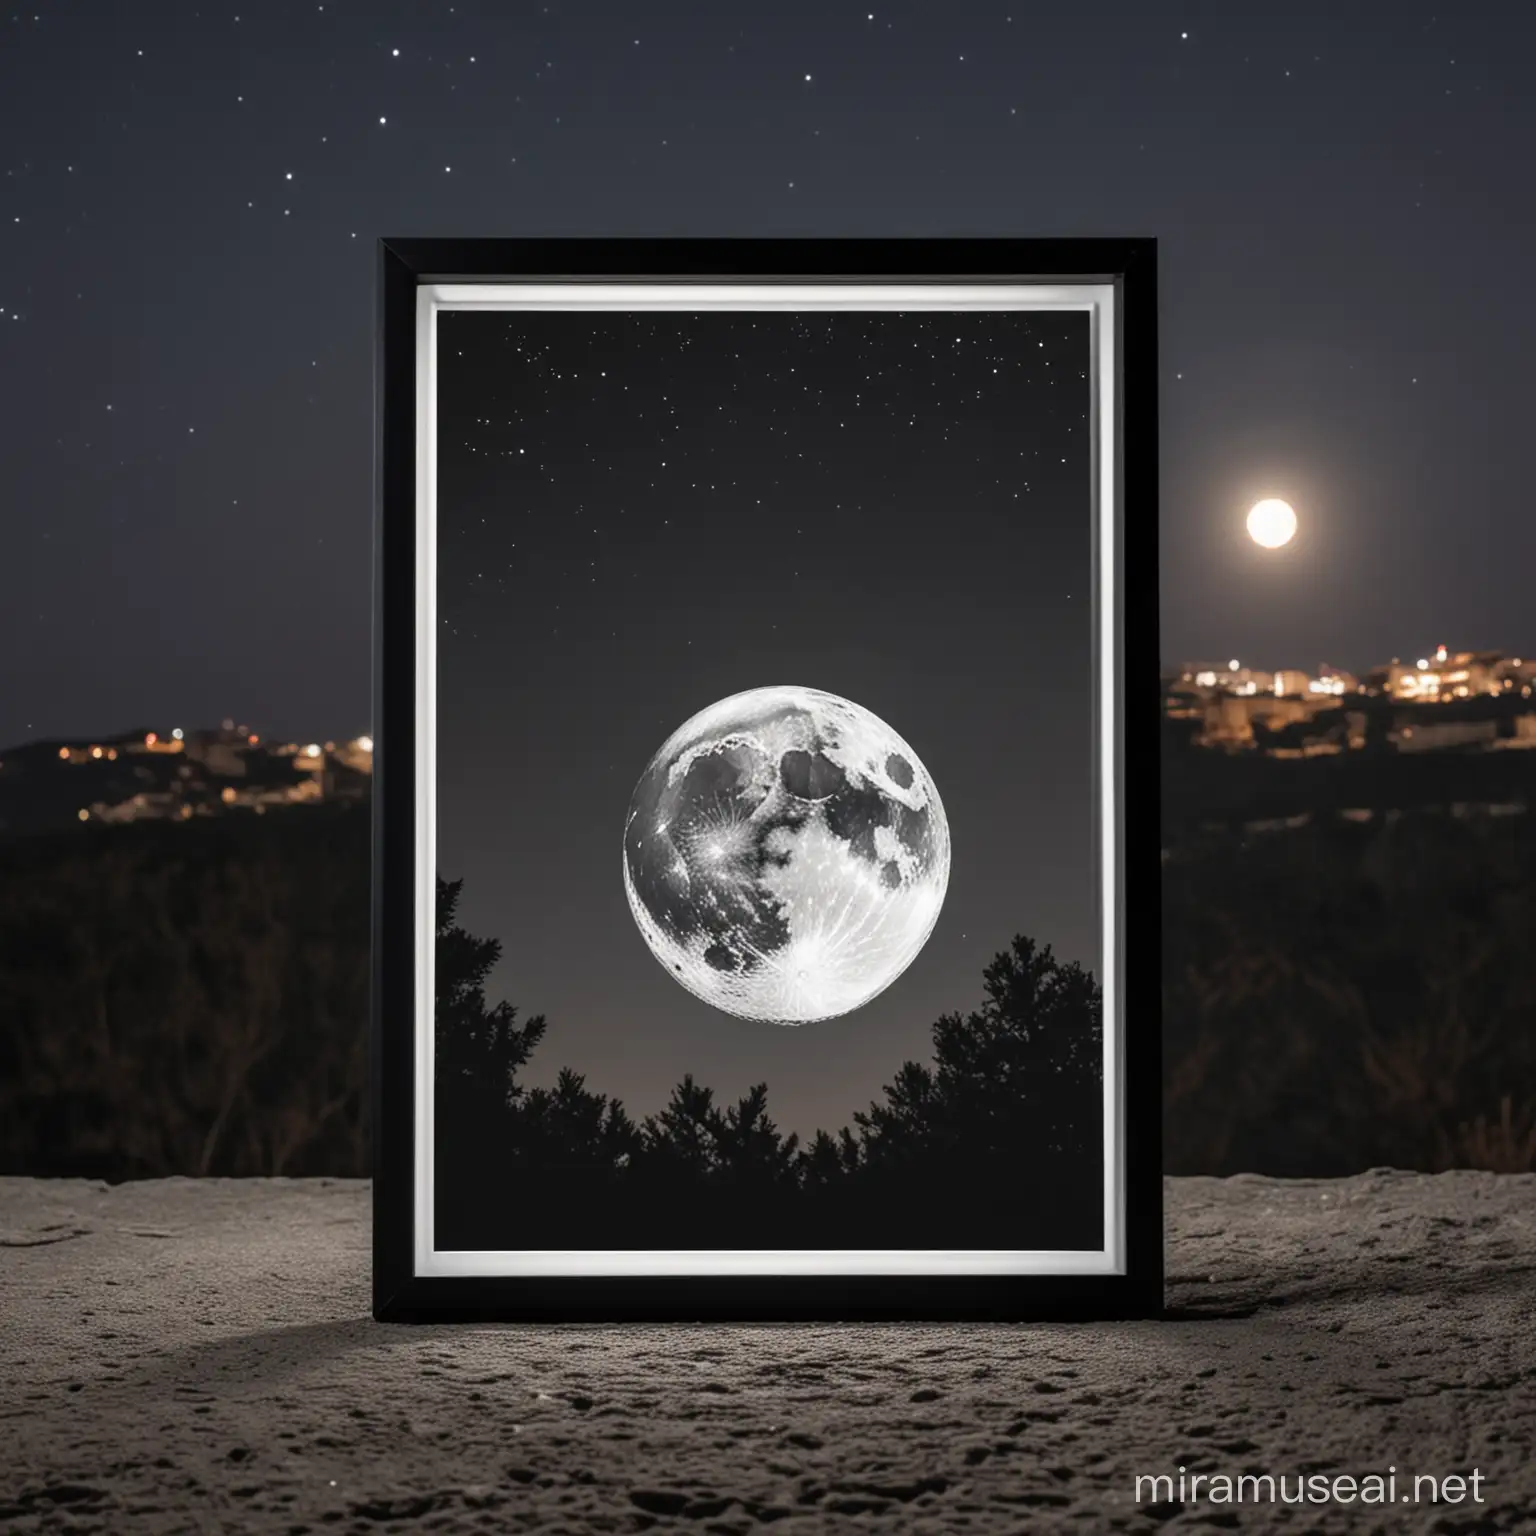 Nighttime A4 Black Frame Mockup under Full Moon